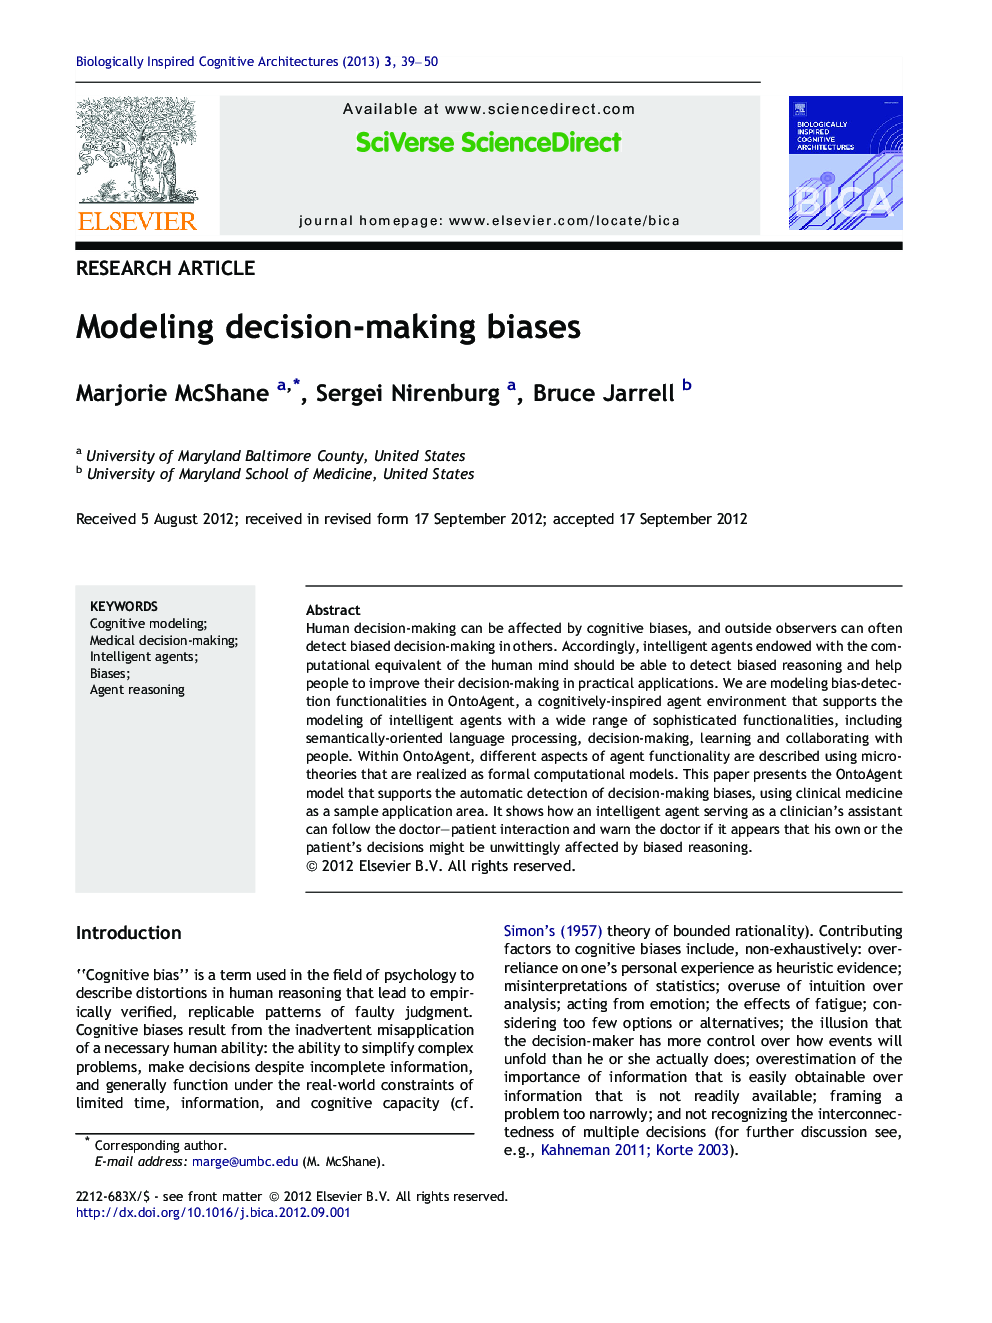 Modeling decision-making biases